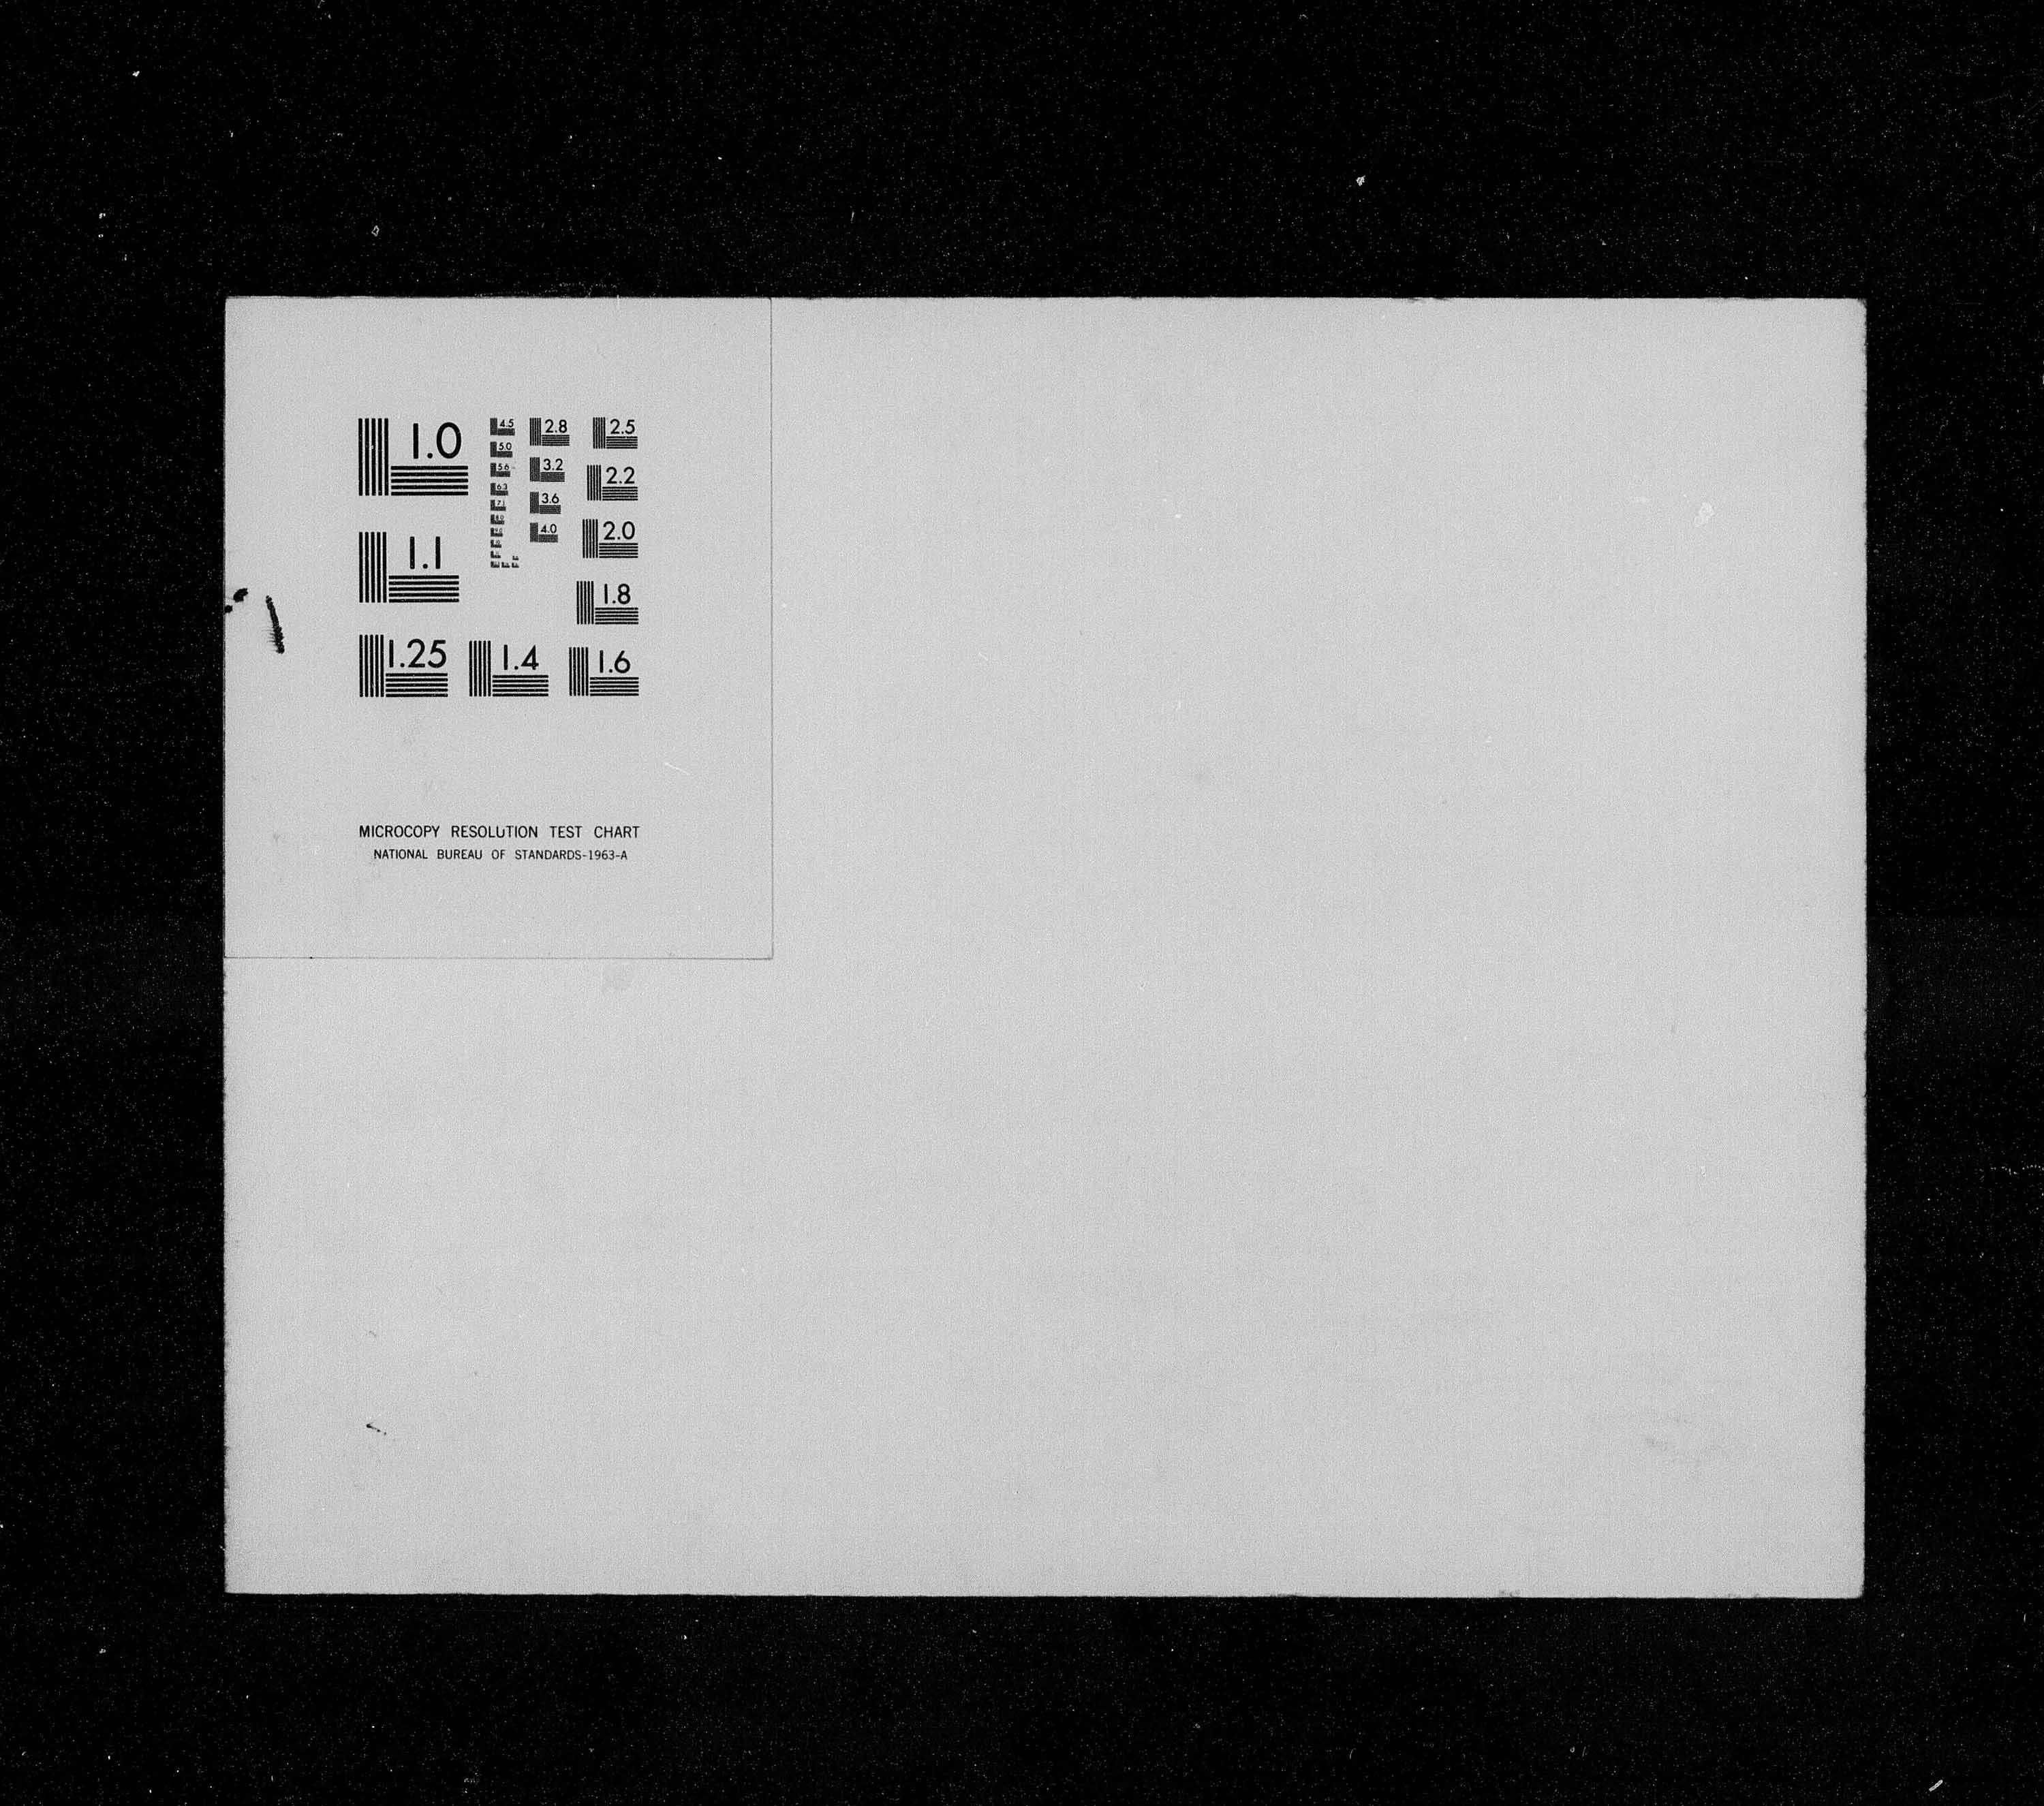 Titre : Recensement du Canada (1871) - N d'enregistrement Mikan : 194056 - Microforme : c-10047